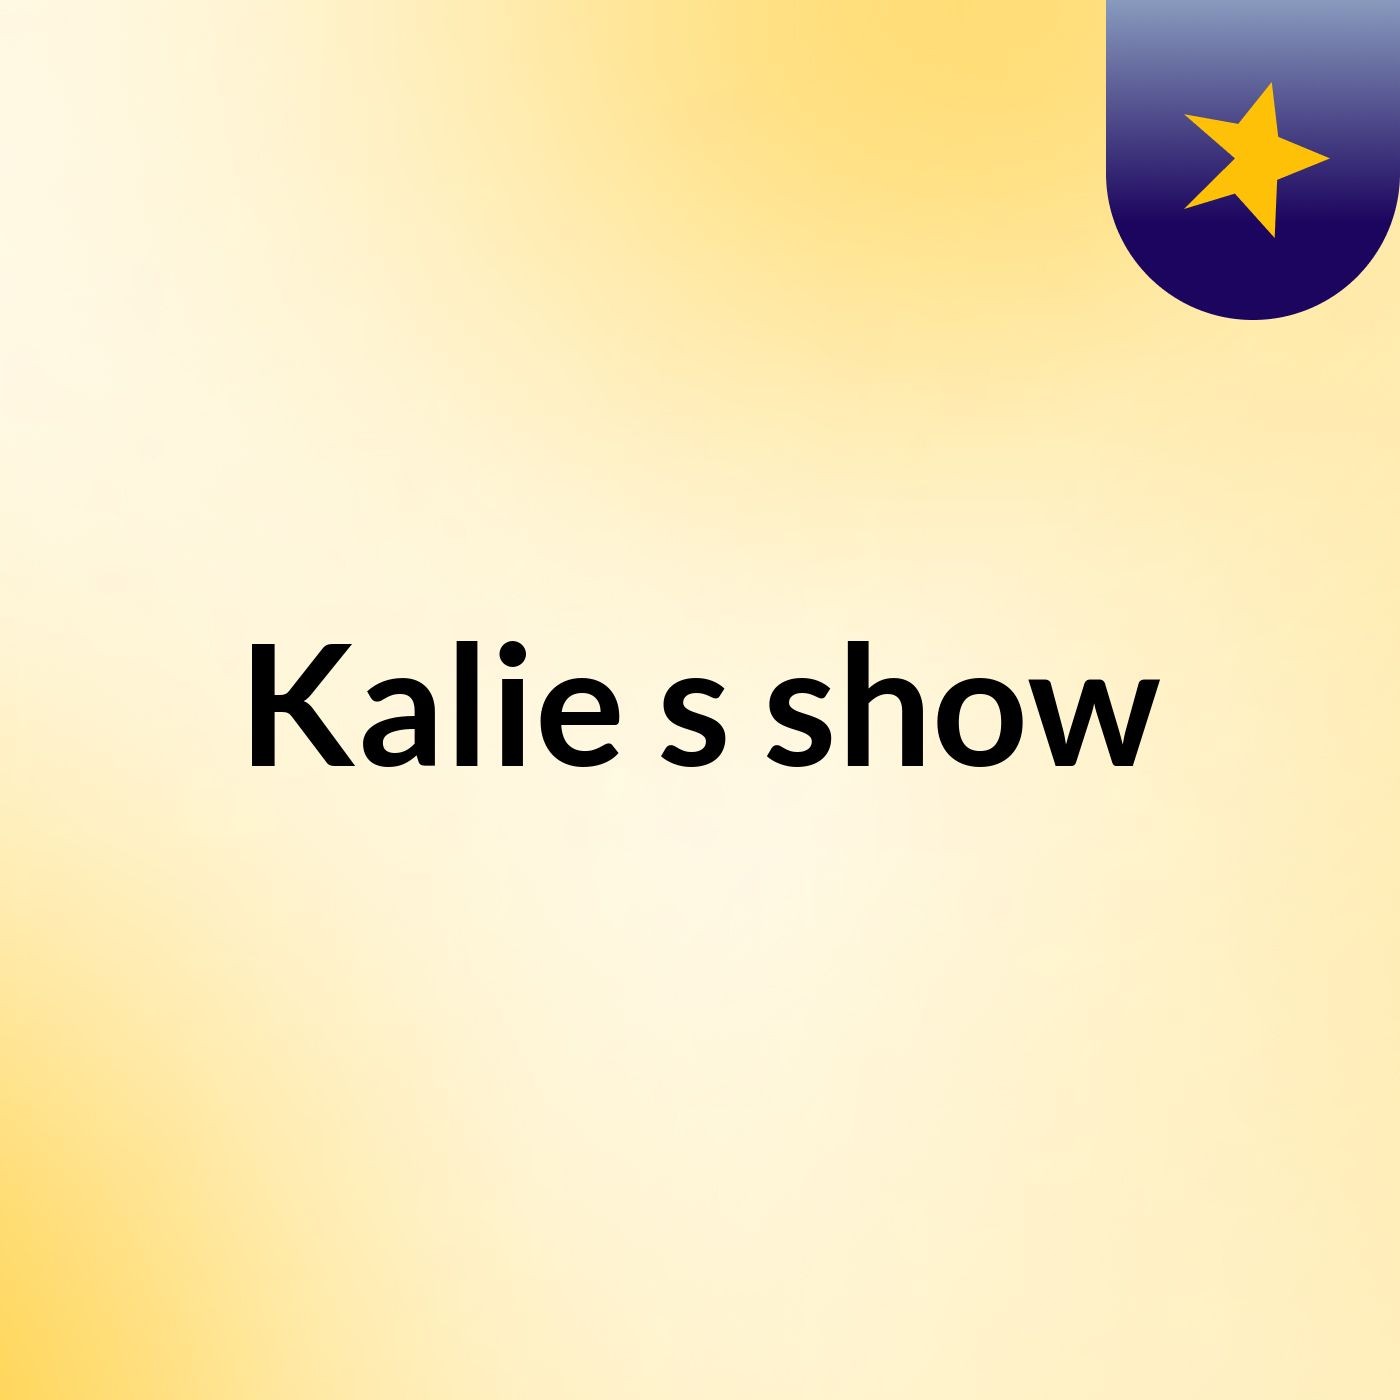 Kalie's show